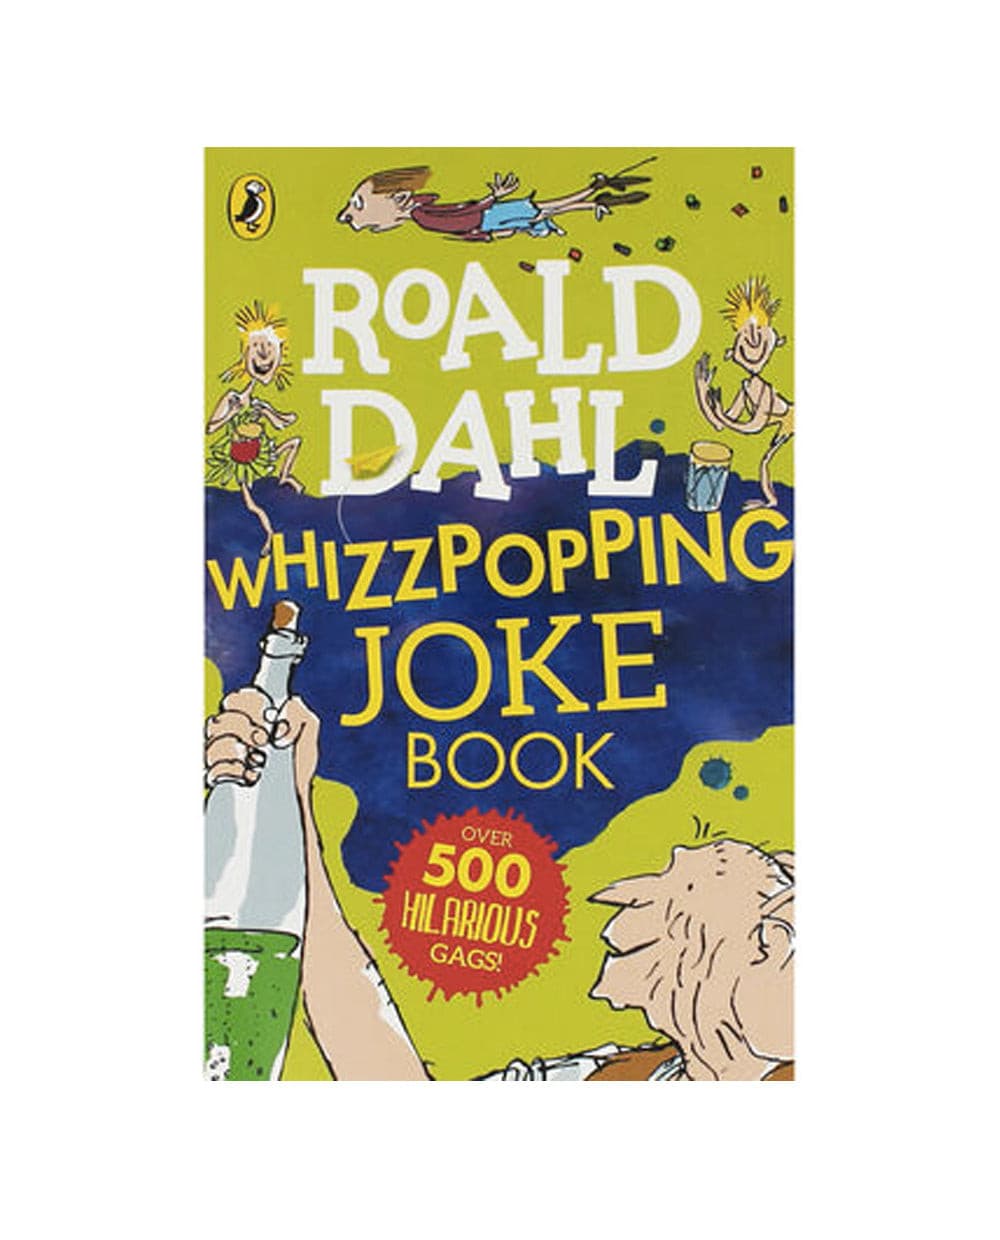 The Roald Dahl Whizzpopping Joke Book